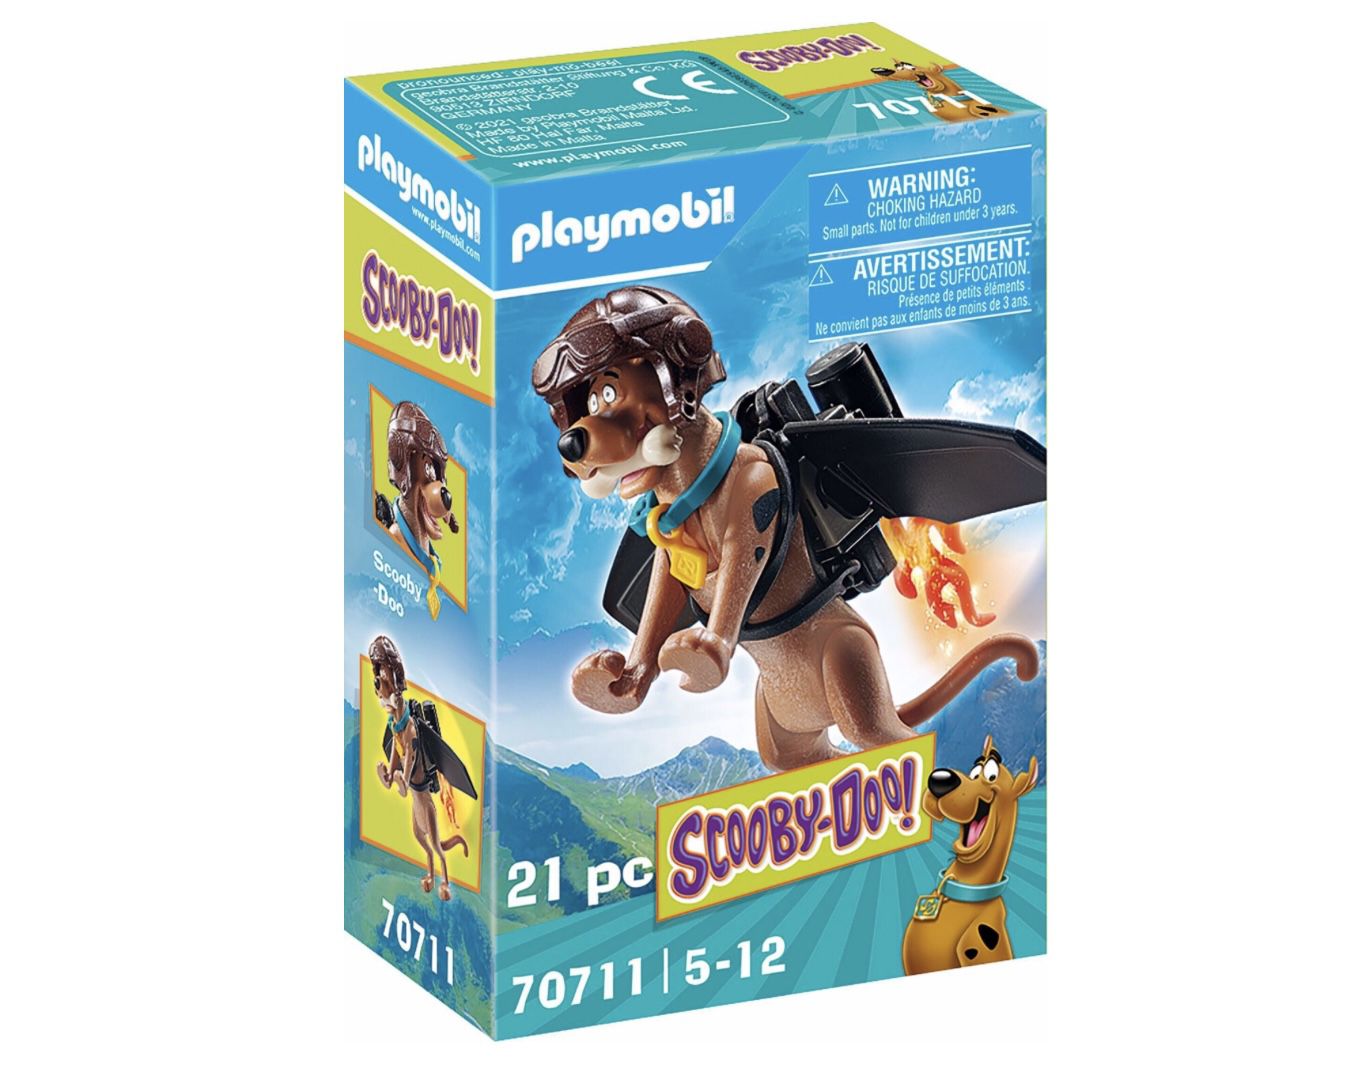 PLAYMOBIL 70711 Scooby DOO! Sammelfigur Pilot für 3,29€ (statt 8€)   Prime